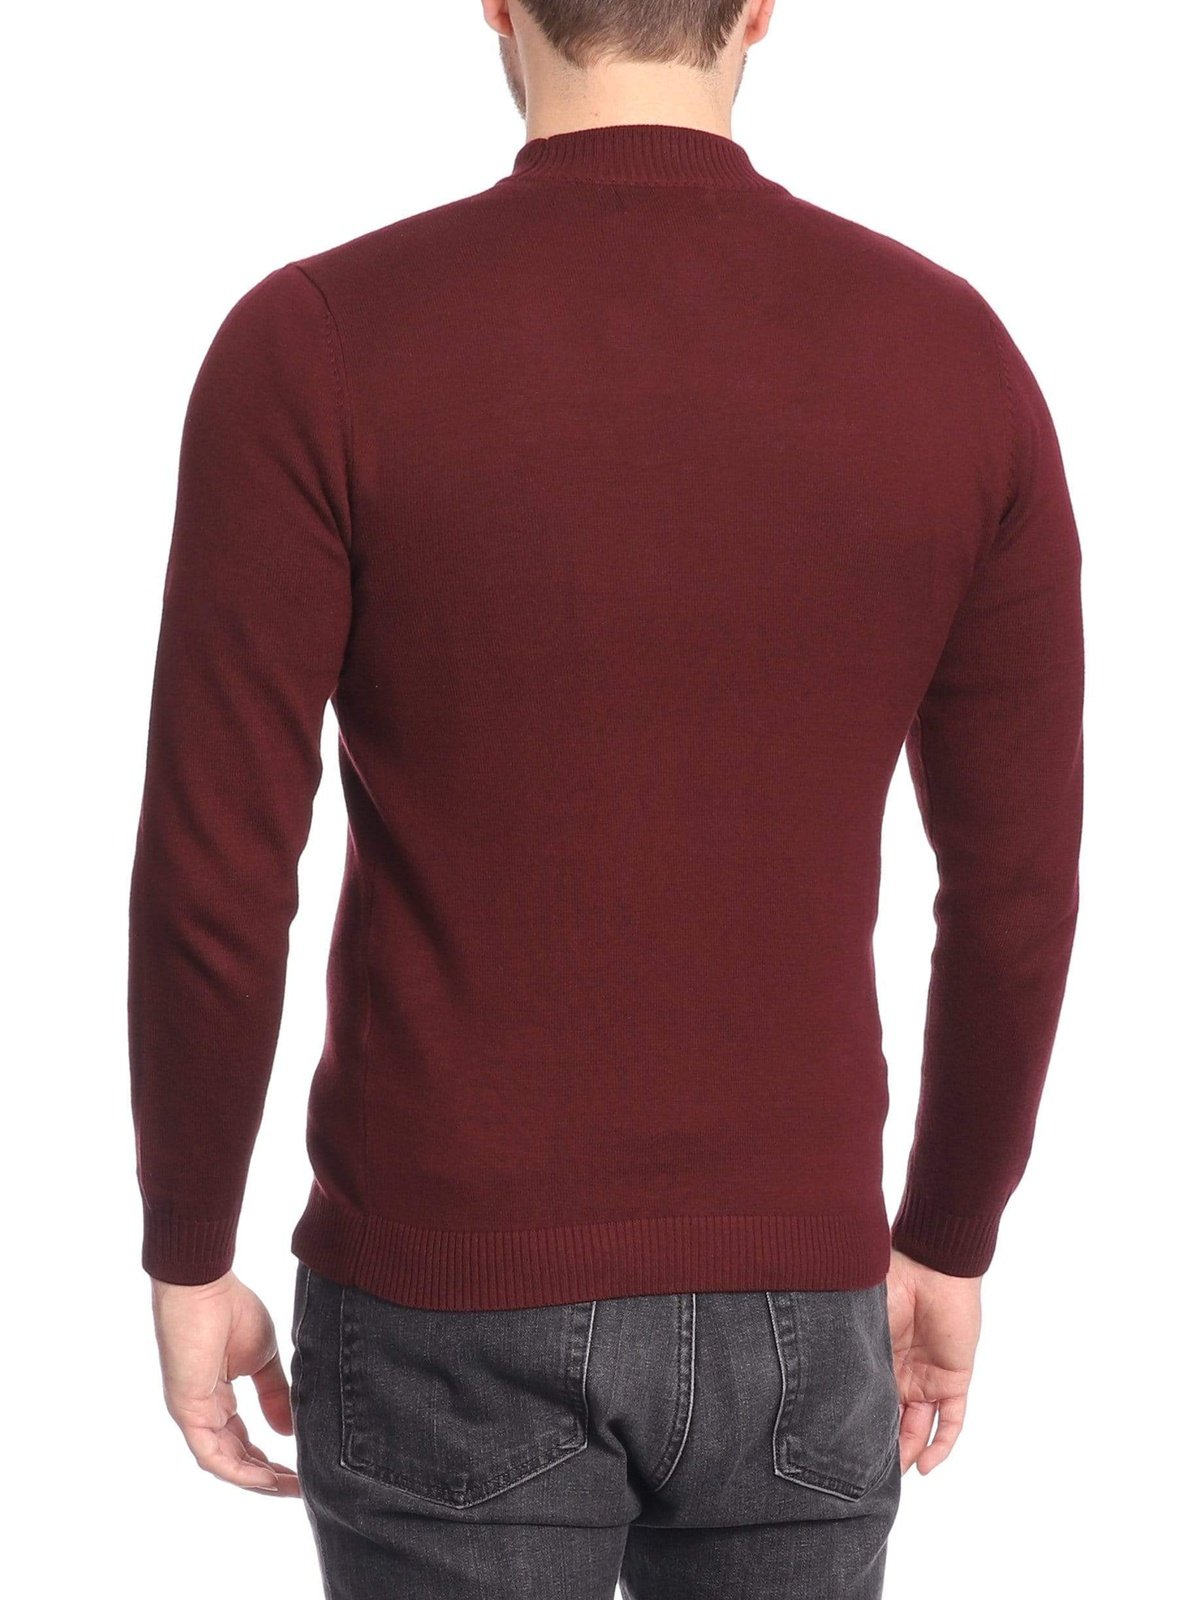 Arthur Black SWEATERS Arthur Black Men&#39;s Solid Burgundy Pullover Cotton Blend Mock Neck Sweater Shirt